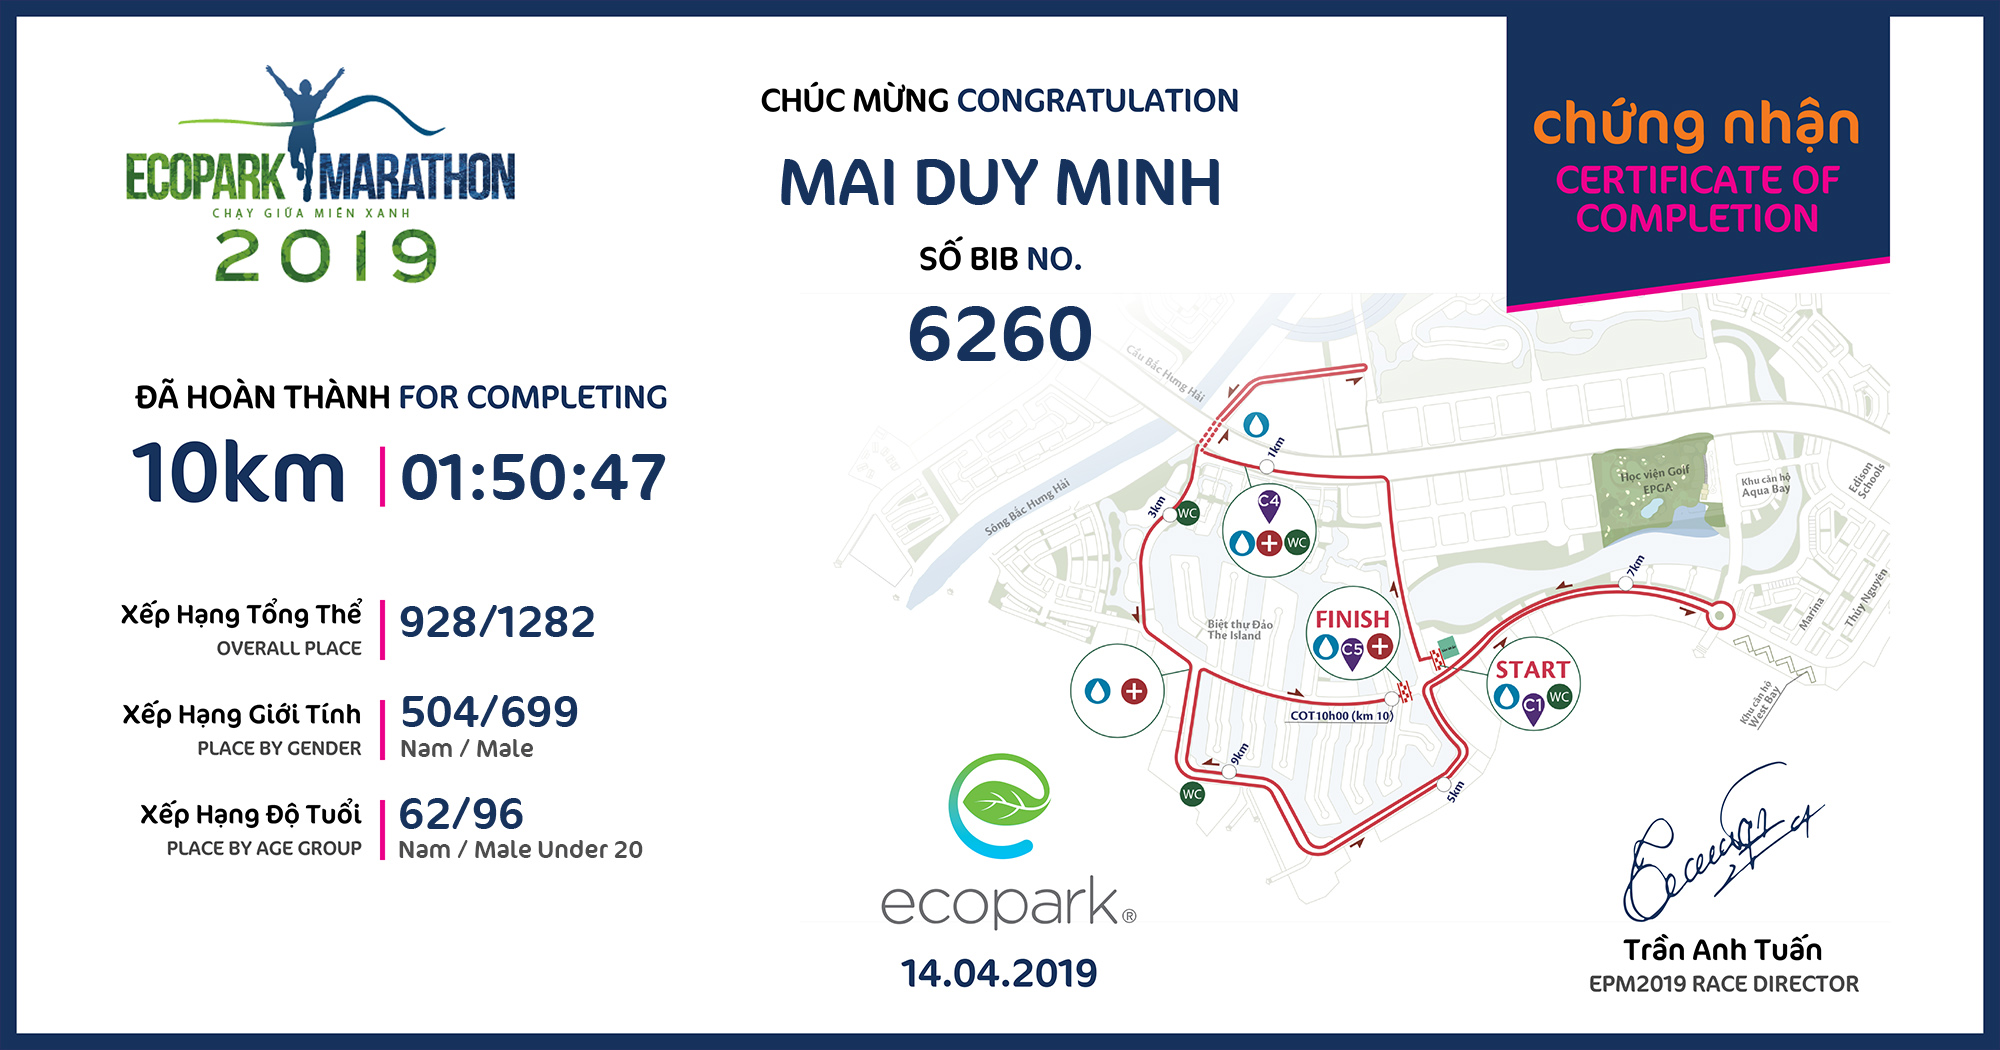 6260 - Mai Duy Minh